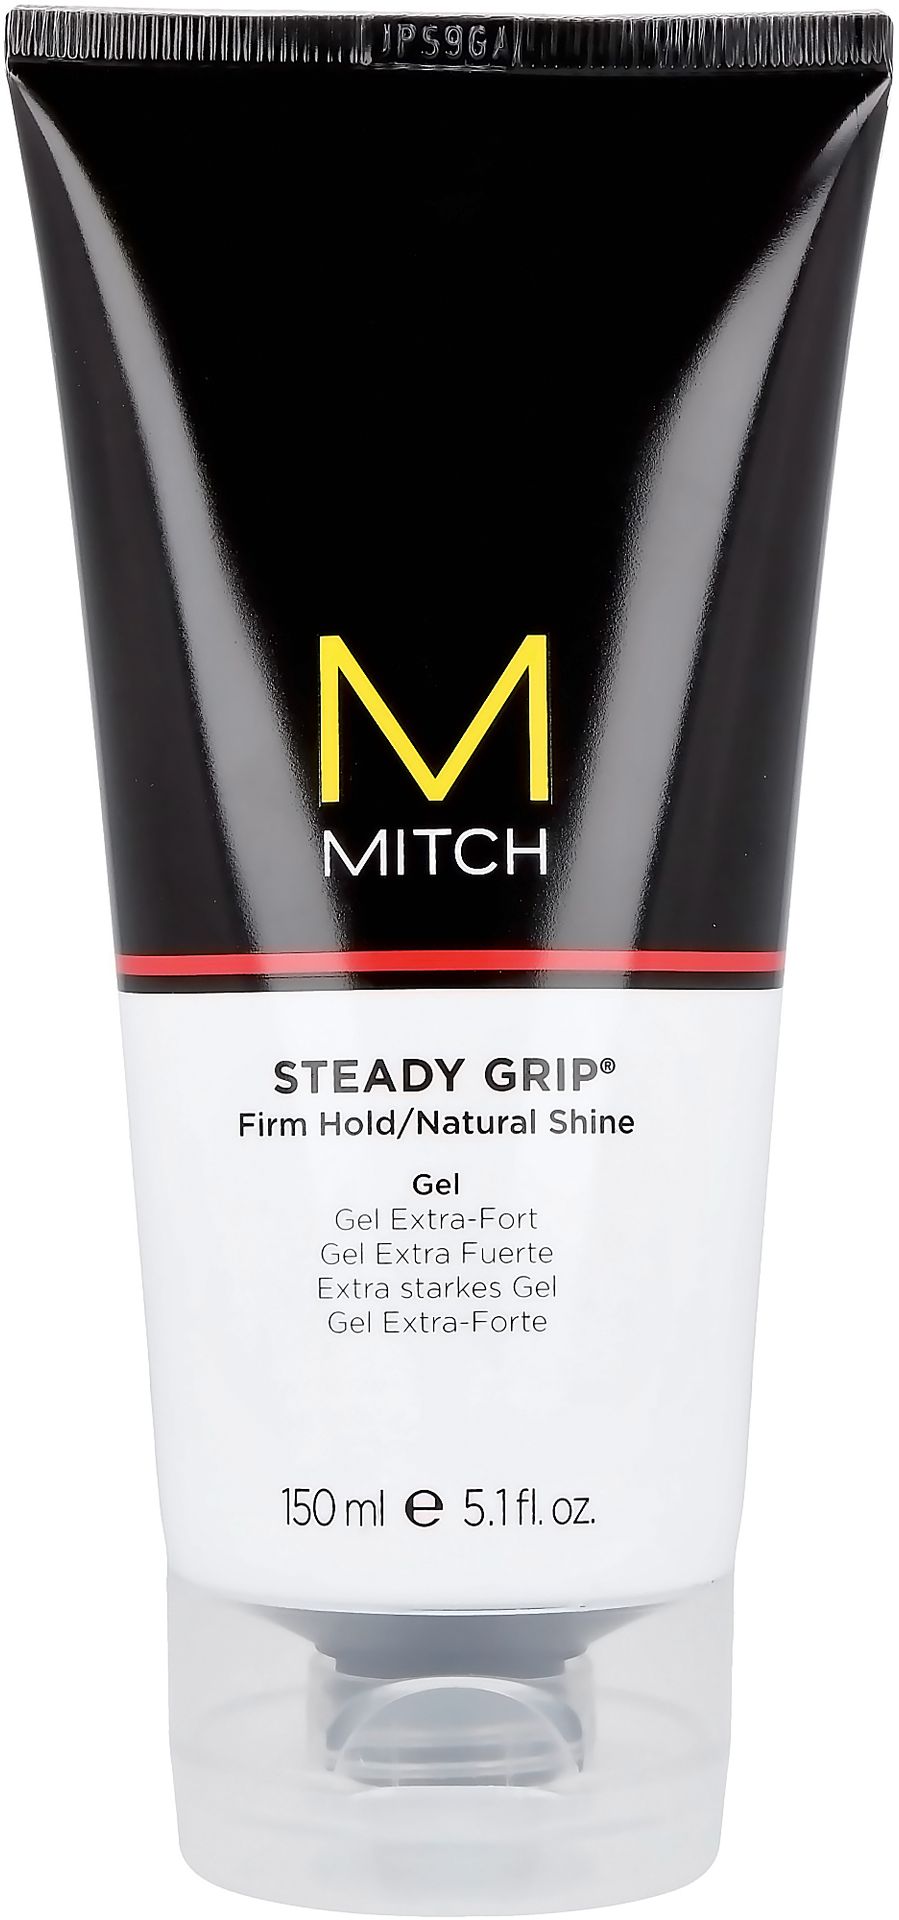 Paul Mitchell Mitch Steady Grip Firm Hold Natural Shine Gel, 150 ml 330361